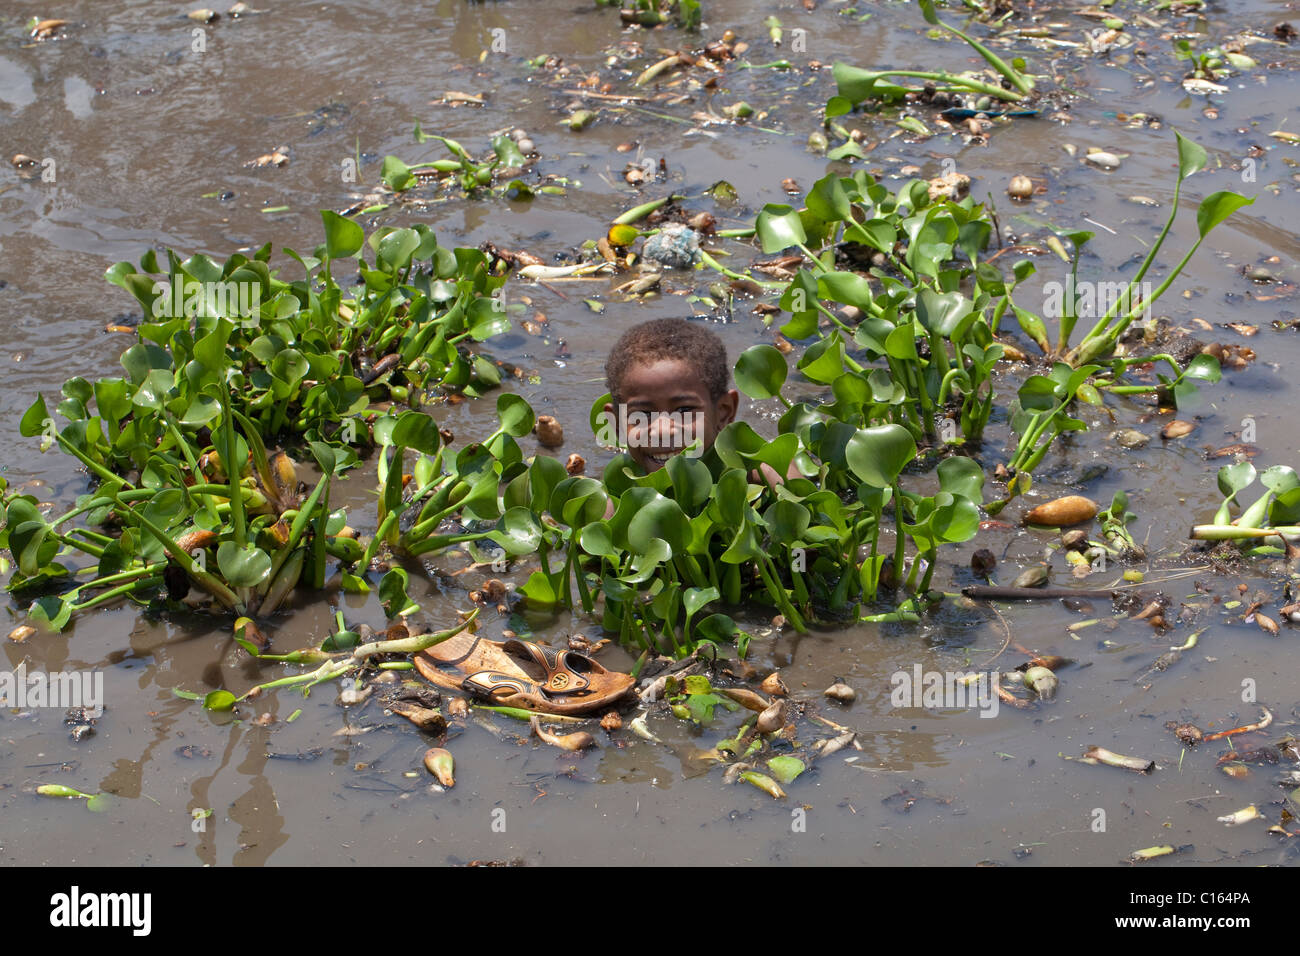 Garçon malgache aider recueillir introduite et envahissante jacinthe d'eau (Eichhornia crasspipes). Madagascar. Banque D'Images